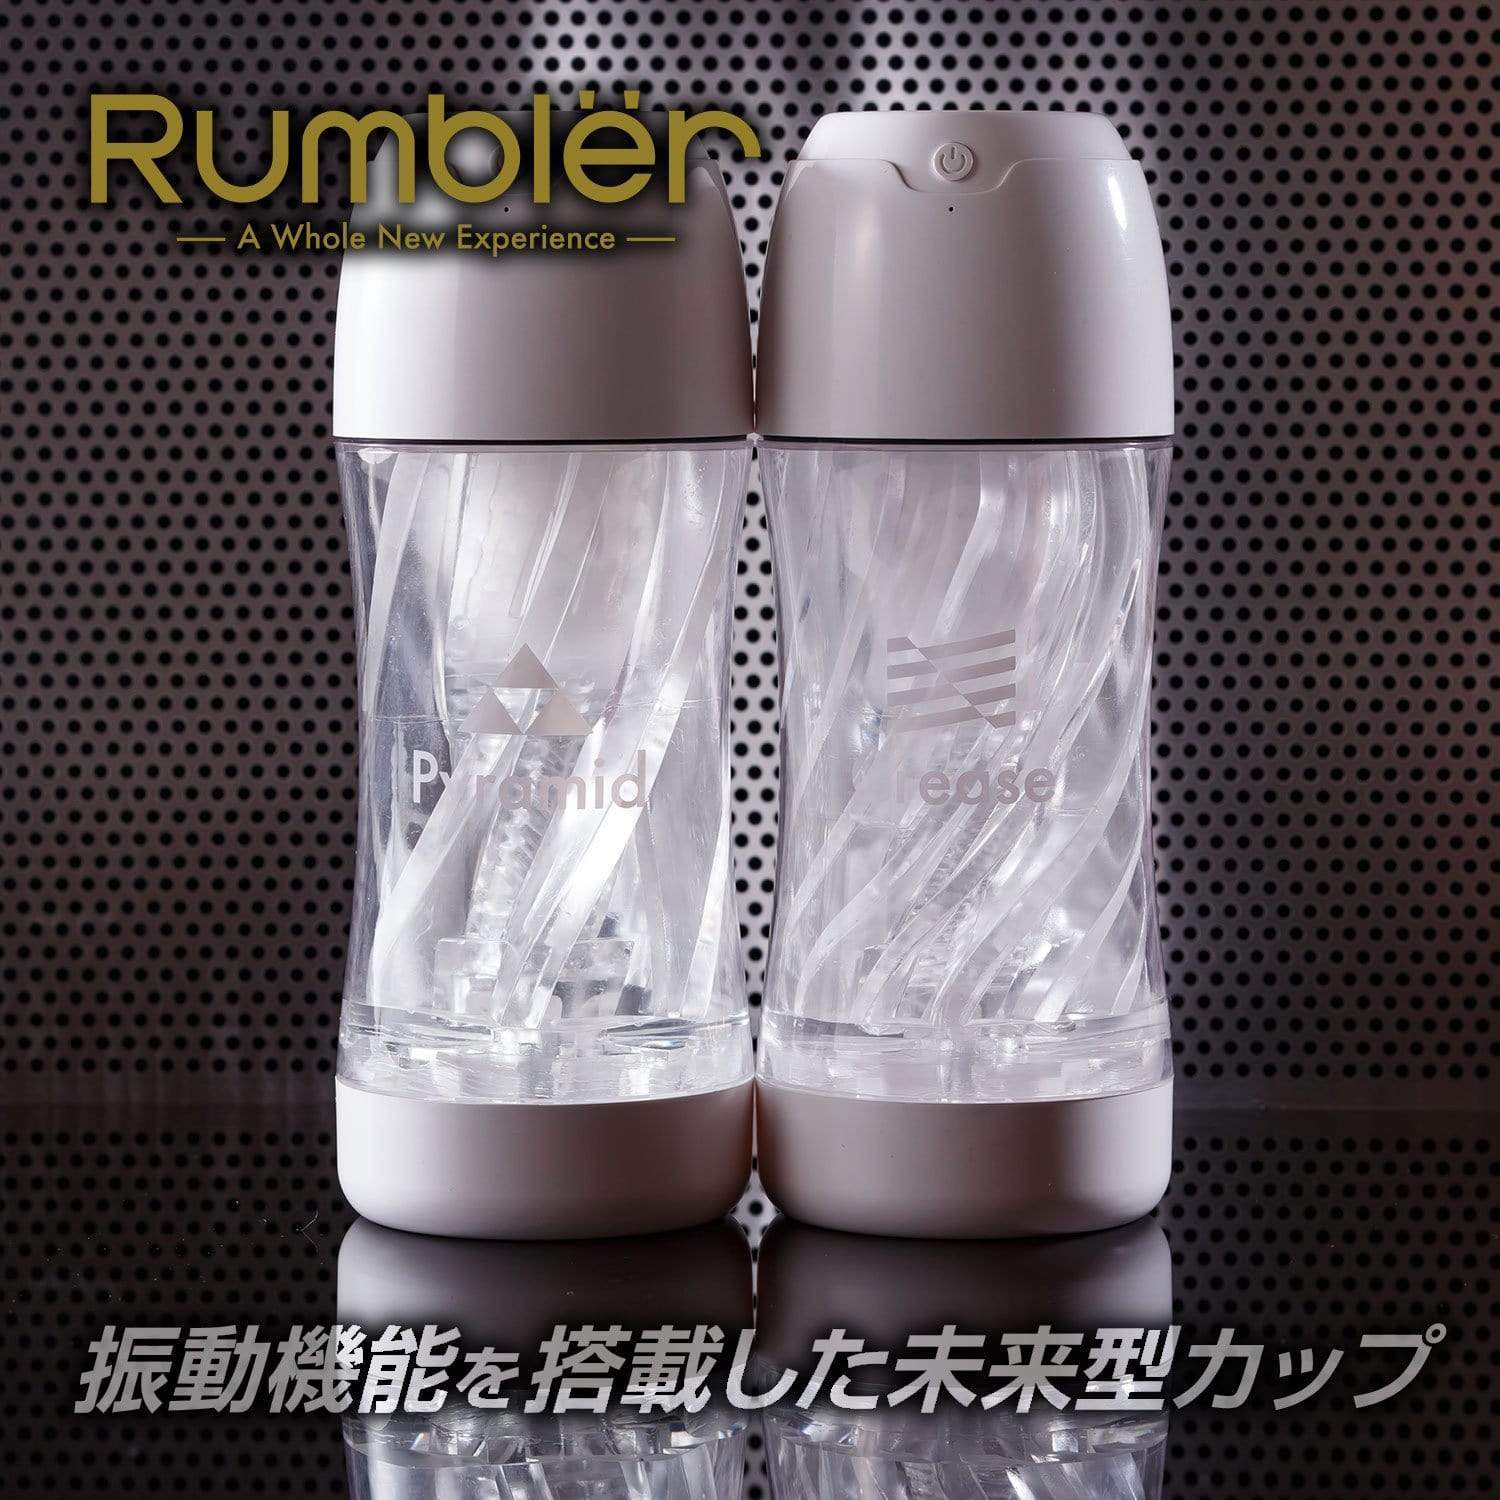 Kuudom - Rambler Crease Rechargeable Masturbator (White) Masturbator Soft Stroker (Vibration) Rechargeable 4571355631363 CherryAffairs